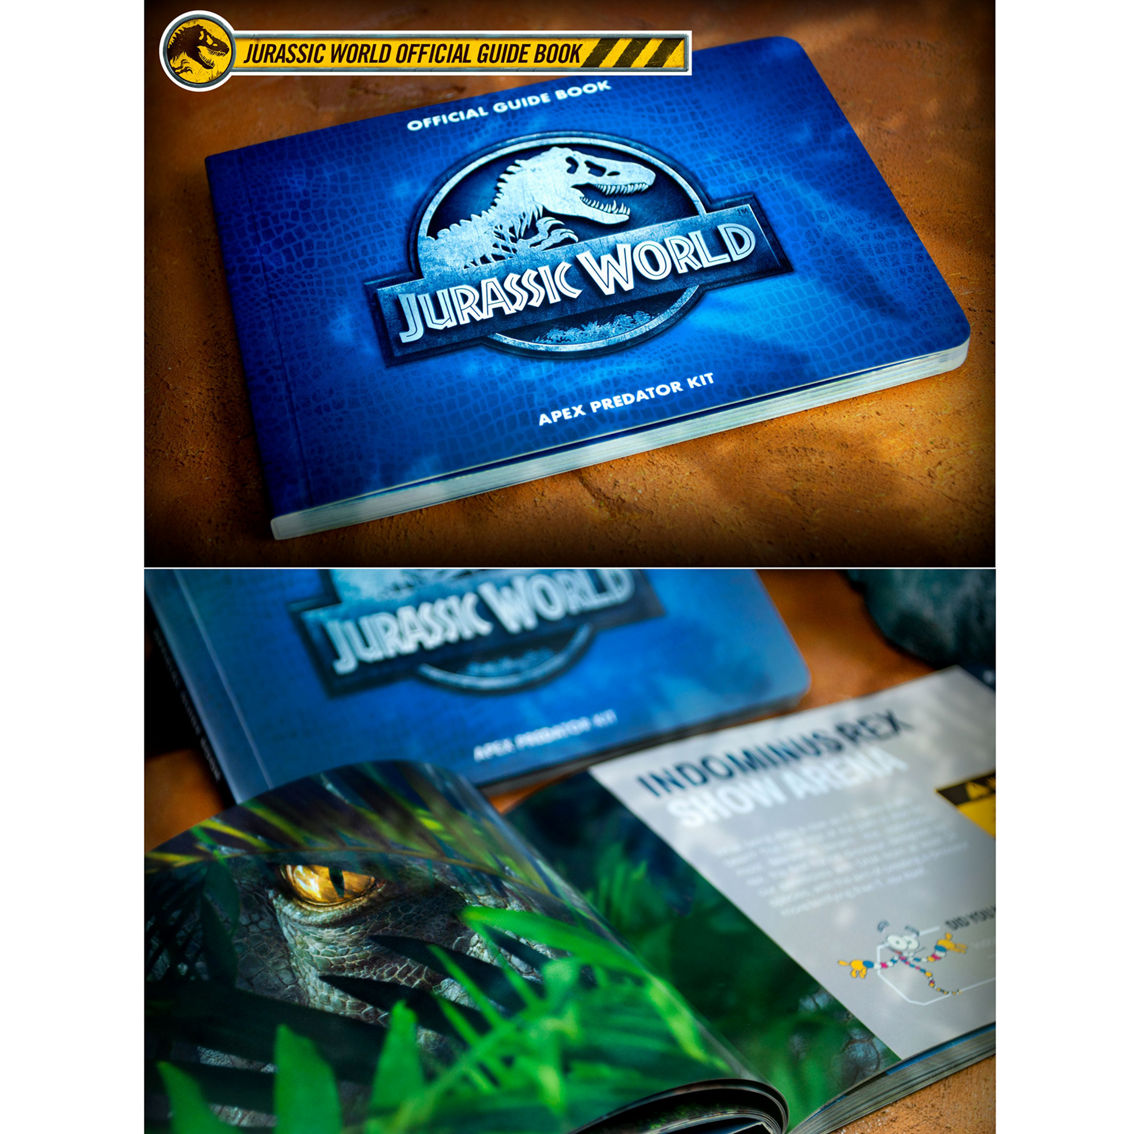 Jurassic World: Apex Predator Kit - Image 4 of 5